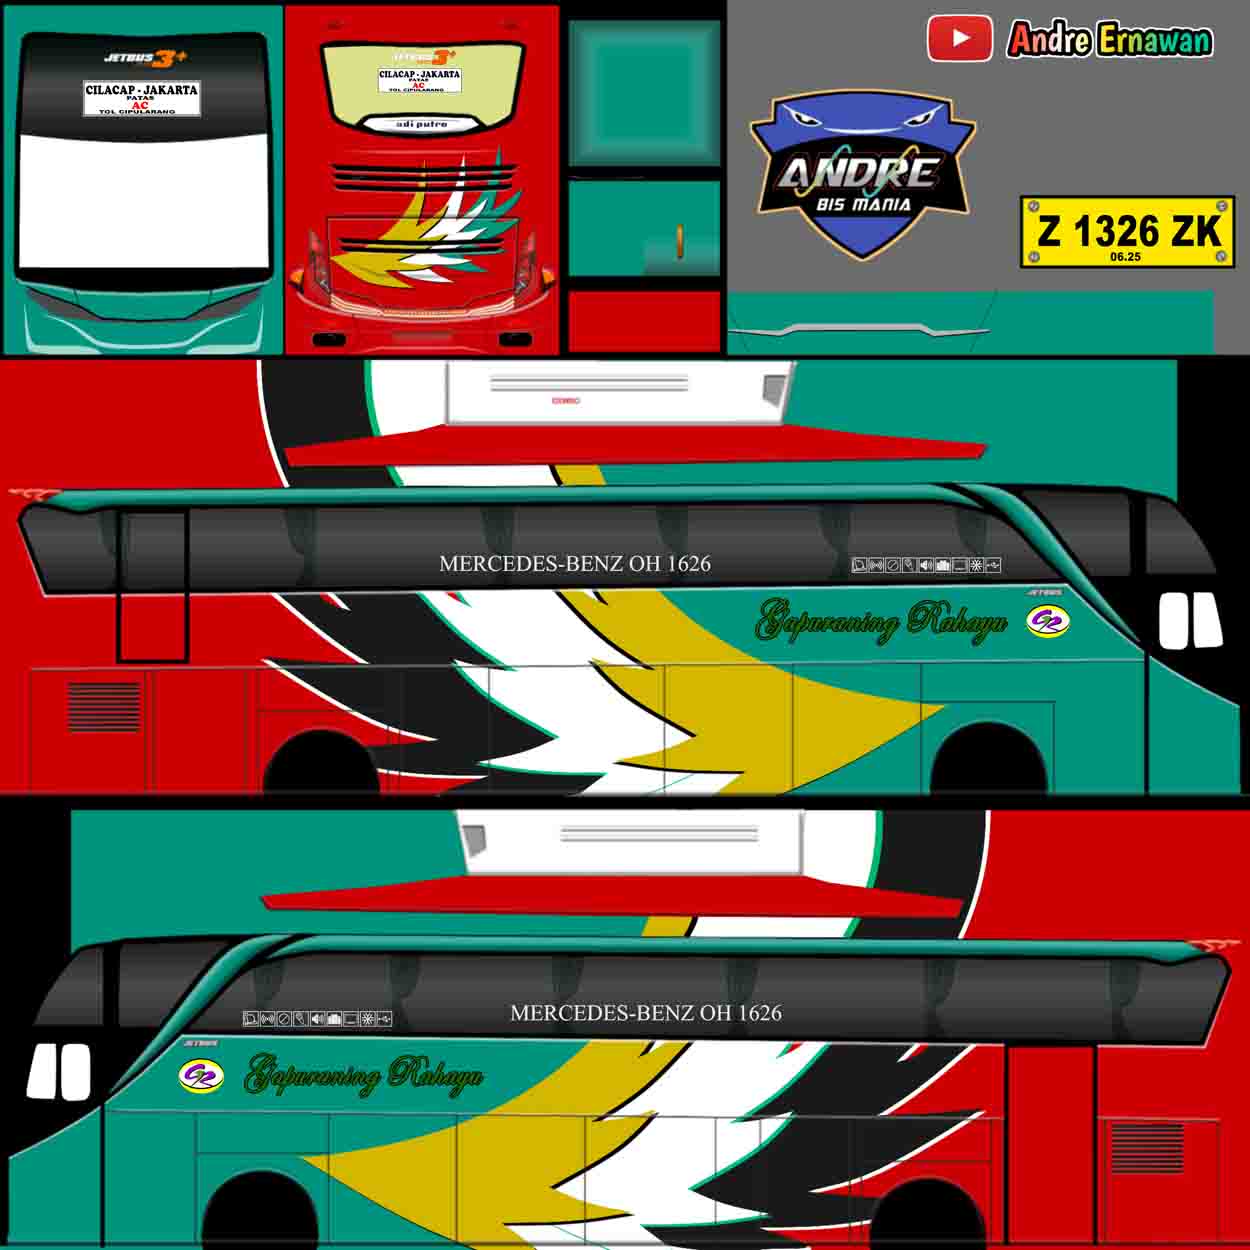 download livery bussid gapuraning rahayu